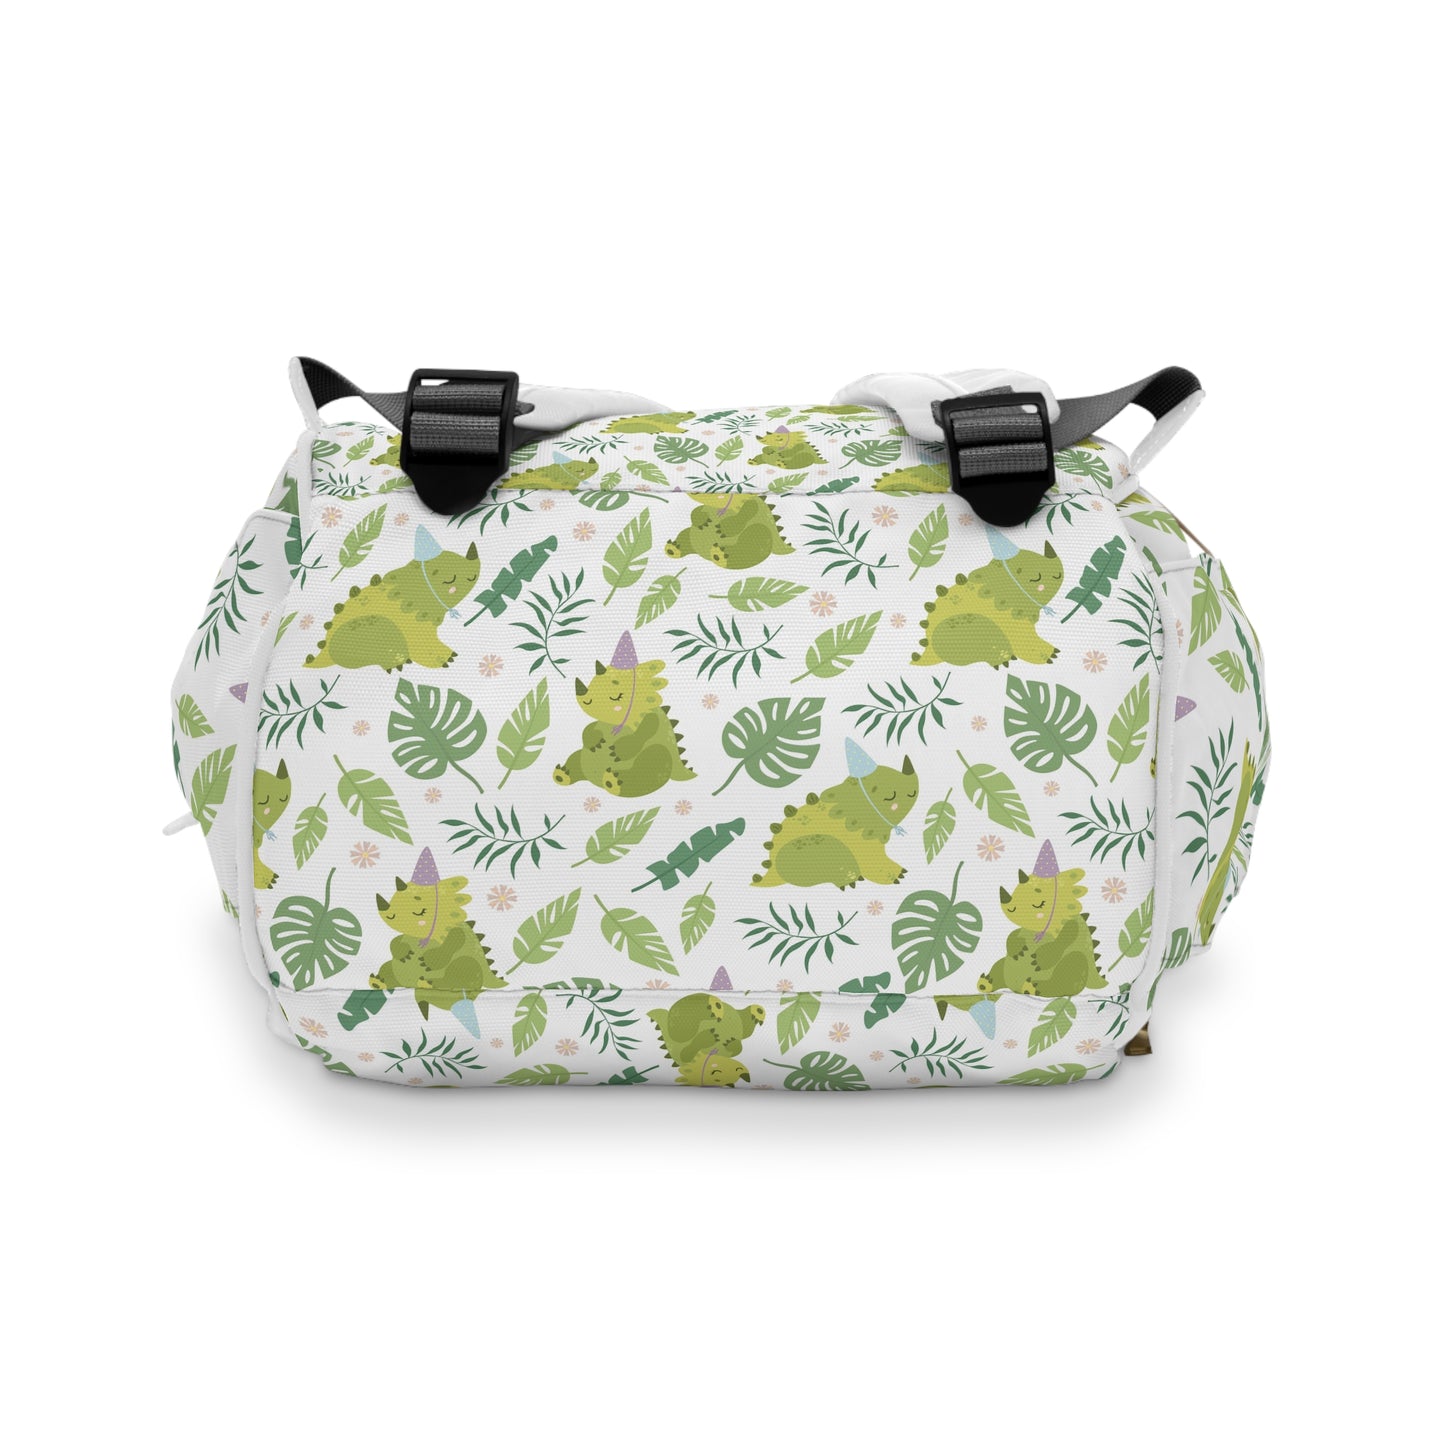 Niccie's Dino Pattern Palm Leaves Diaper Backpack: Trendy Multifunctional Bag